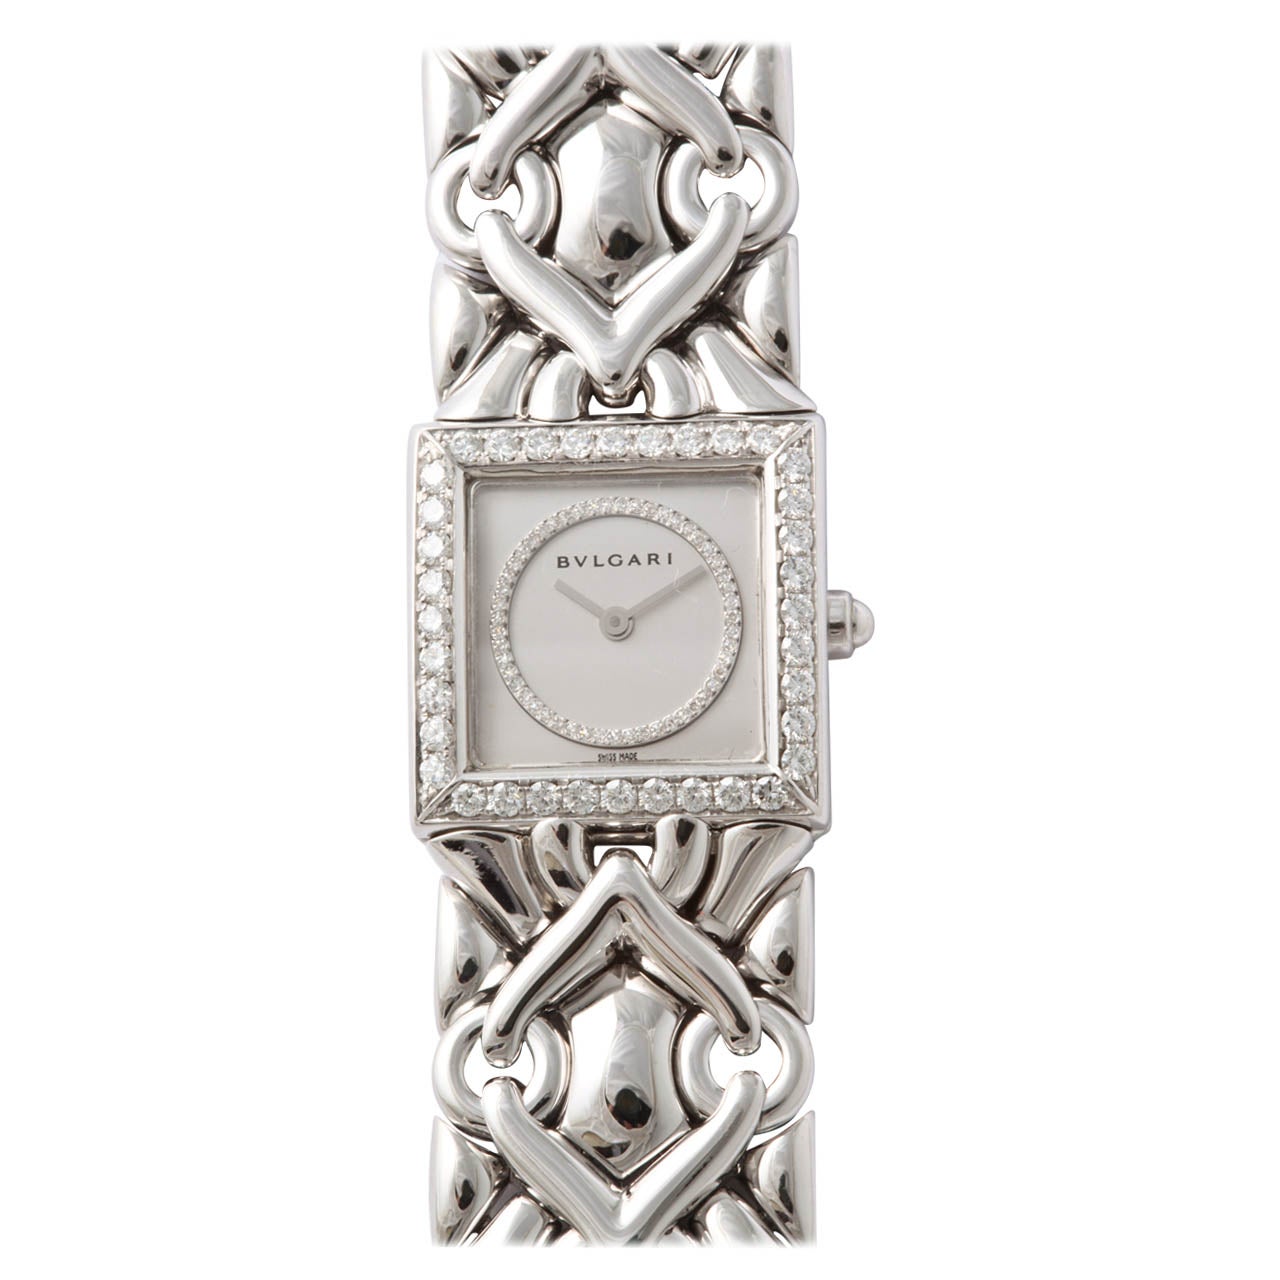 Bulgari Lady's White Gold and Diamond Bracelet Watch circa 1990s